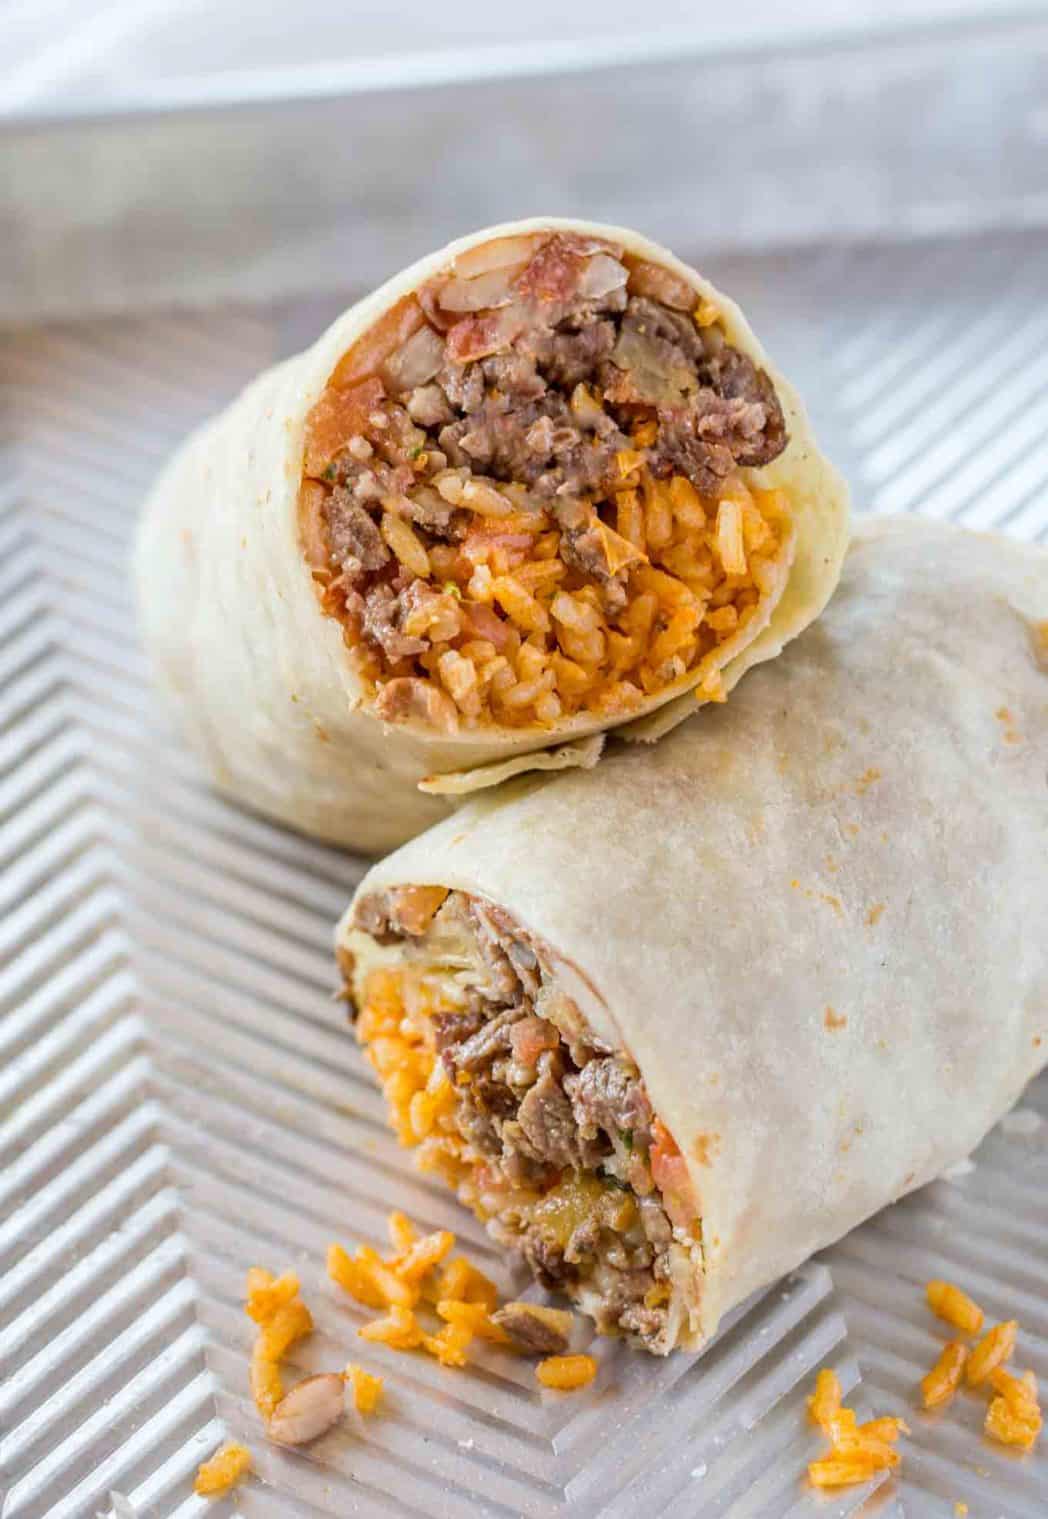 Ramona's Beef And Potato Burrito Recipe - Find Vegetarian Recipes